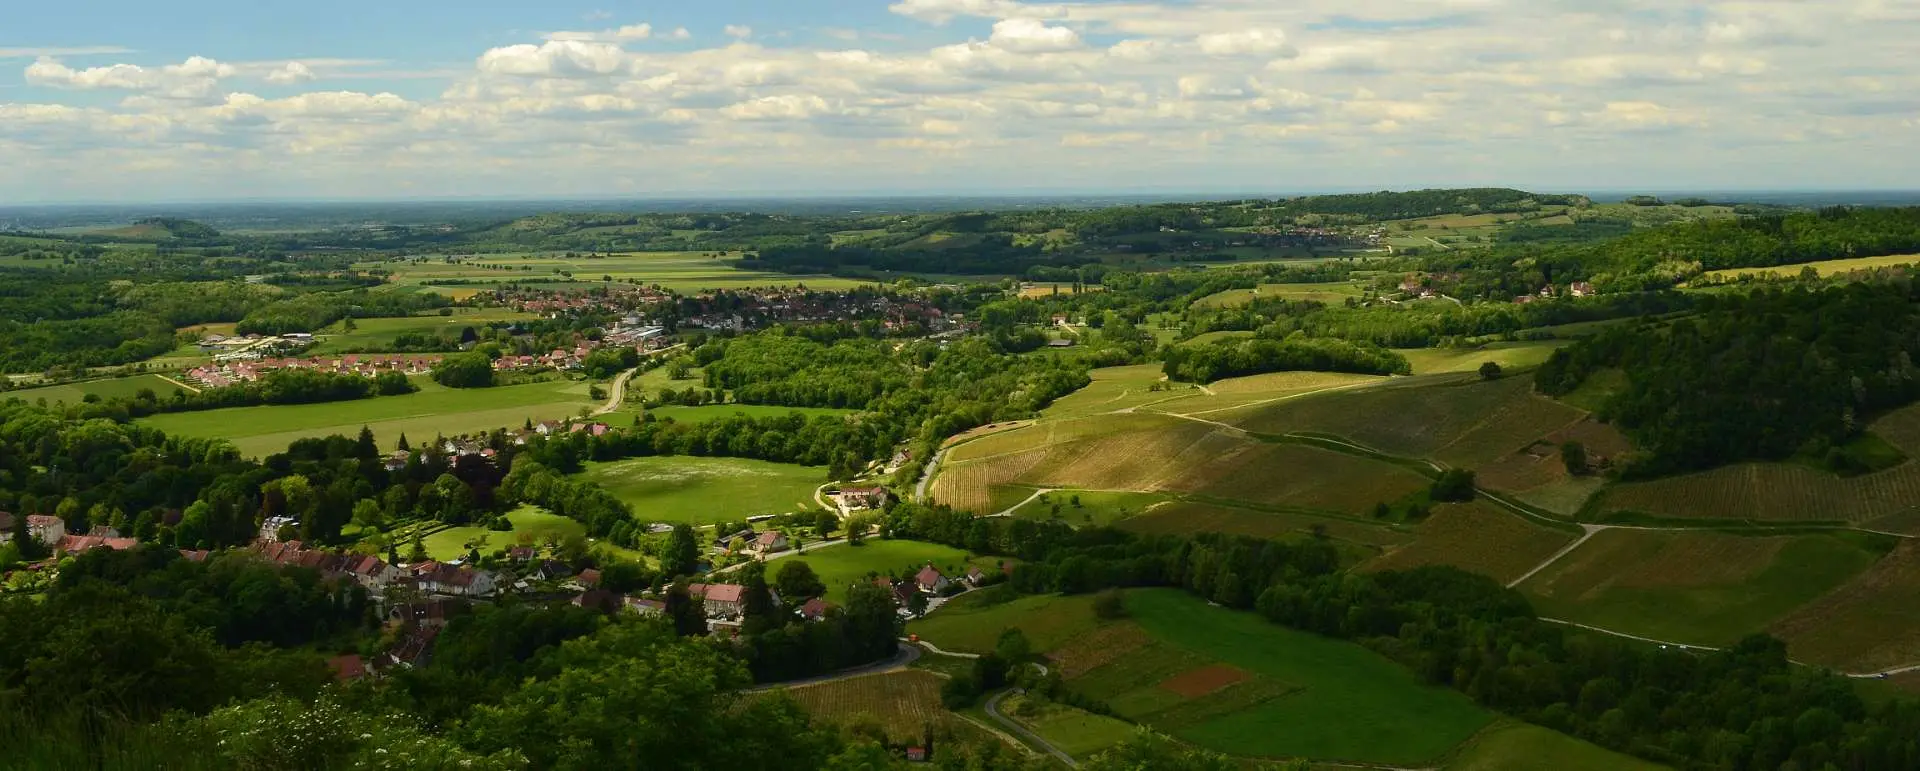 Bourgogne-Franche-Comté - City trips for groups exploring together